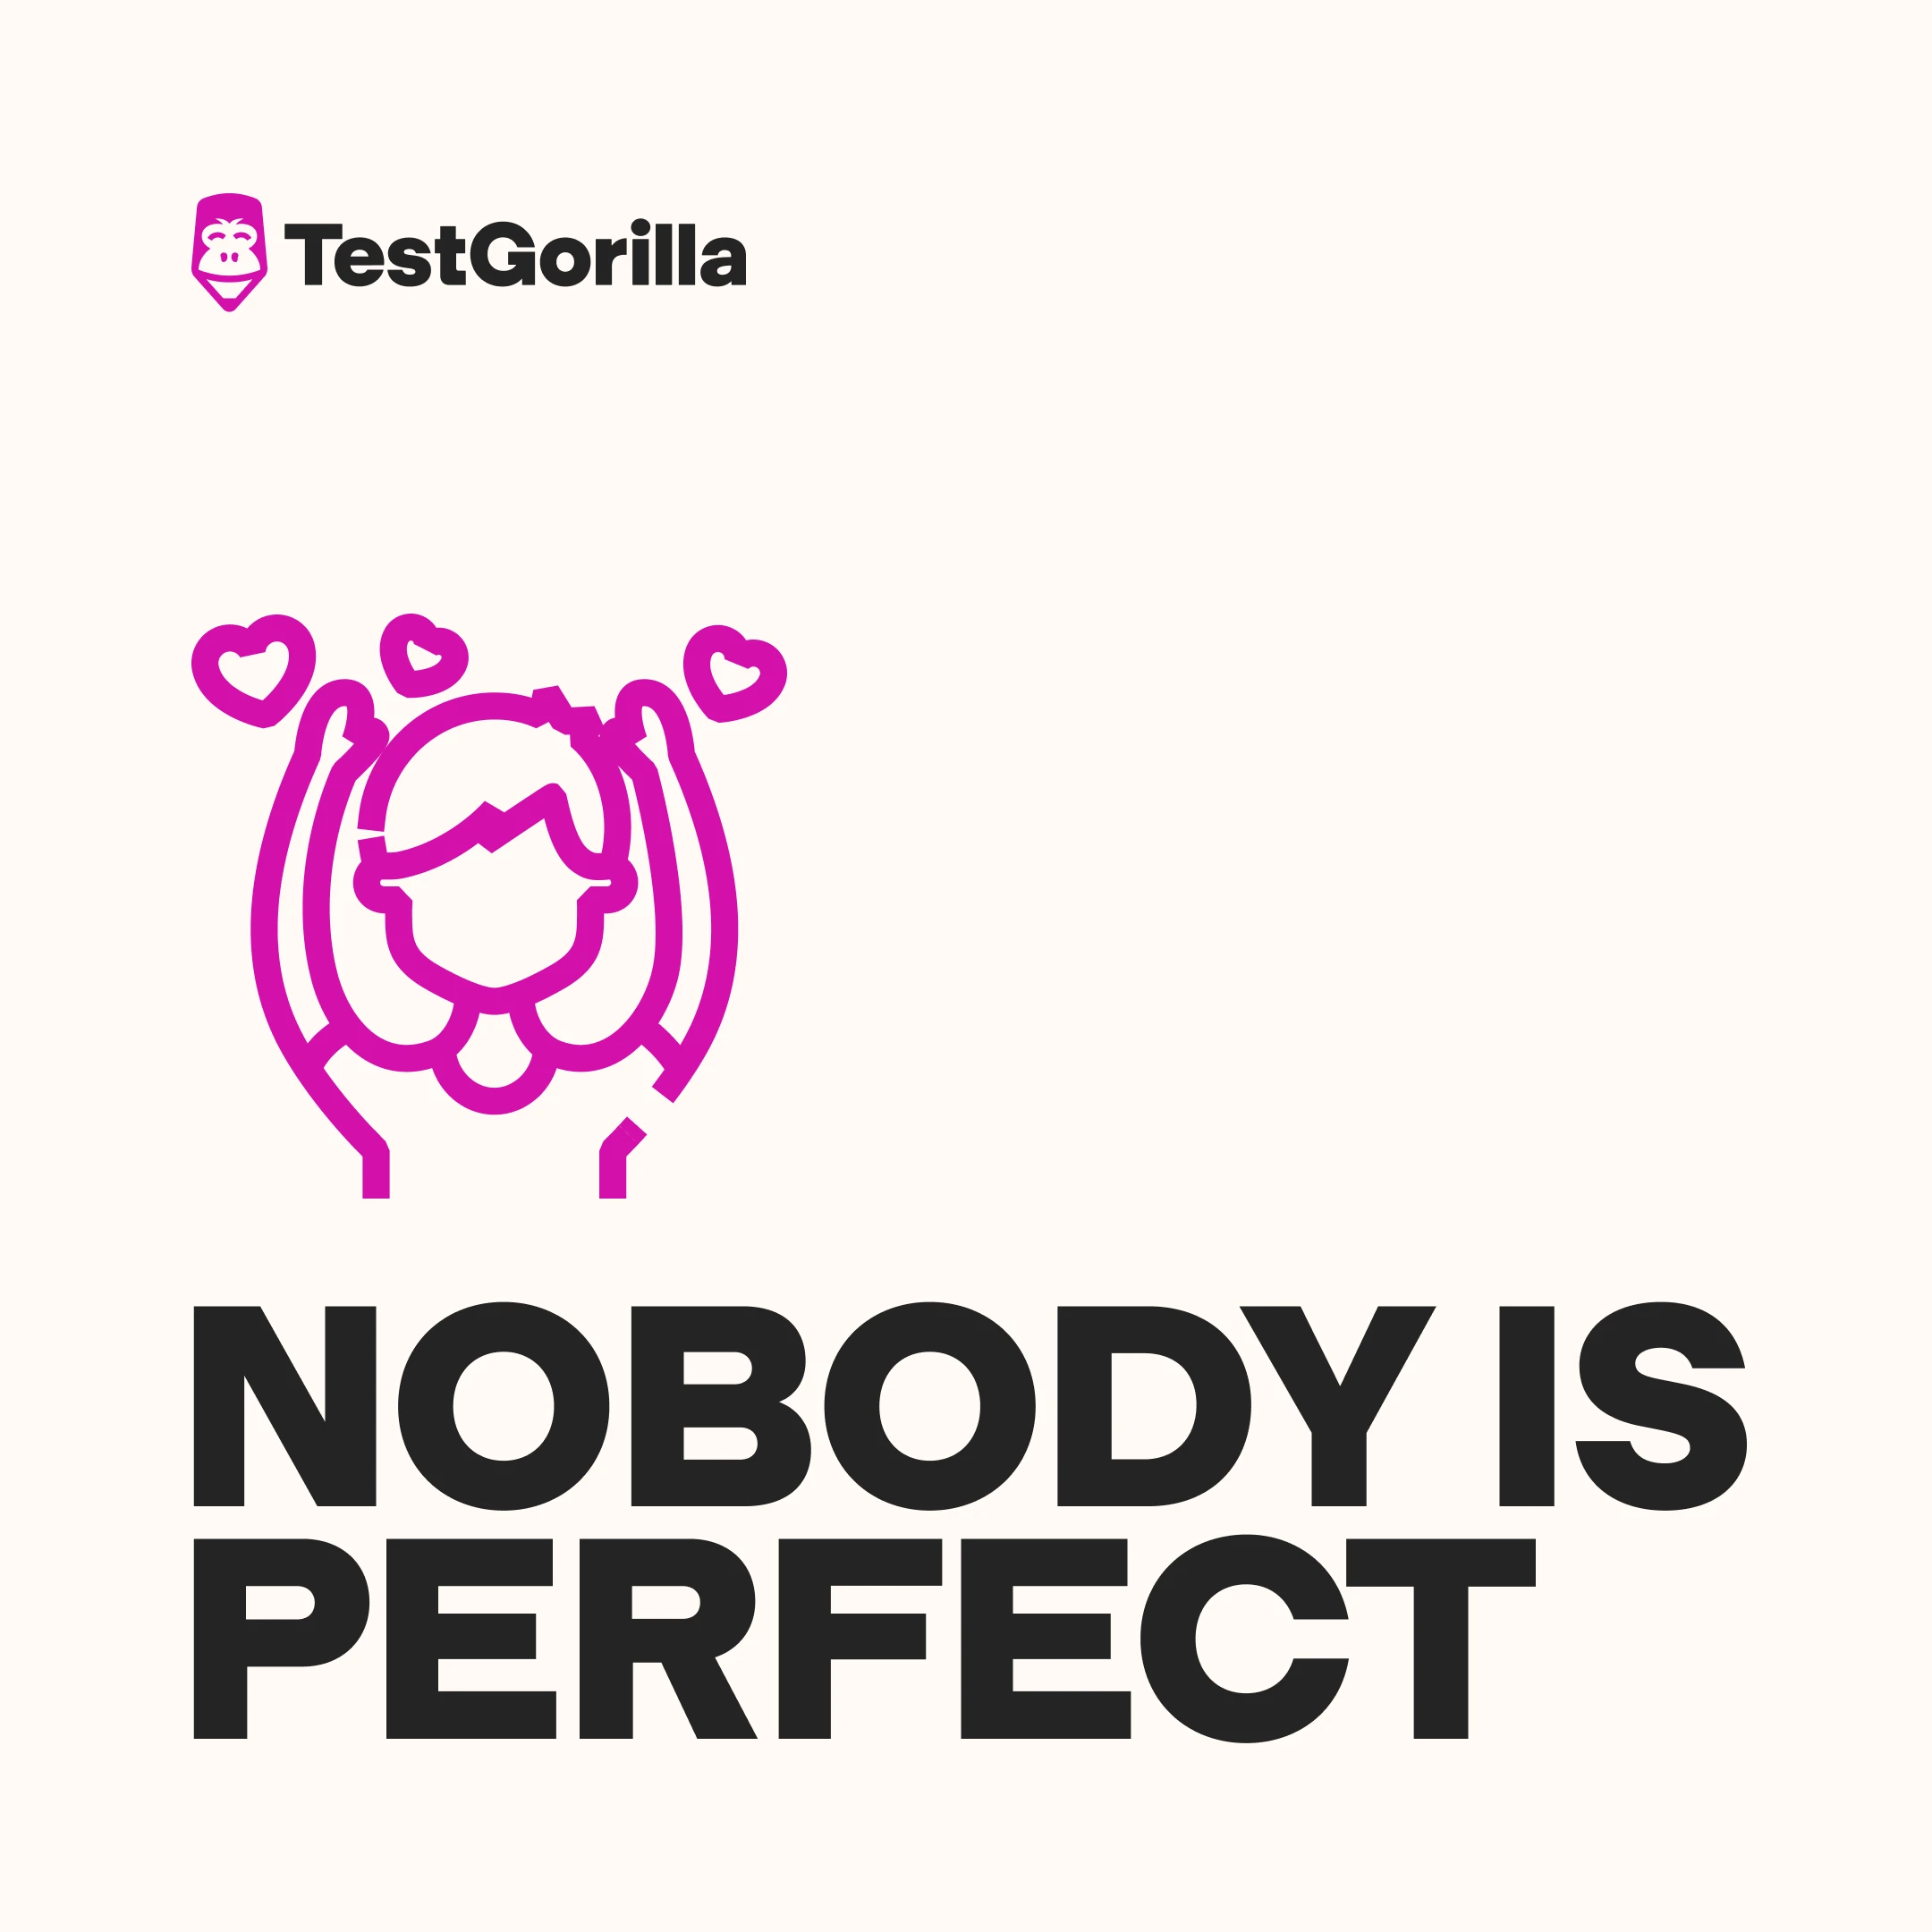 A TestGorilla Icon that says 'Nobody is perfect'